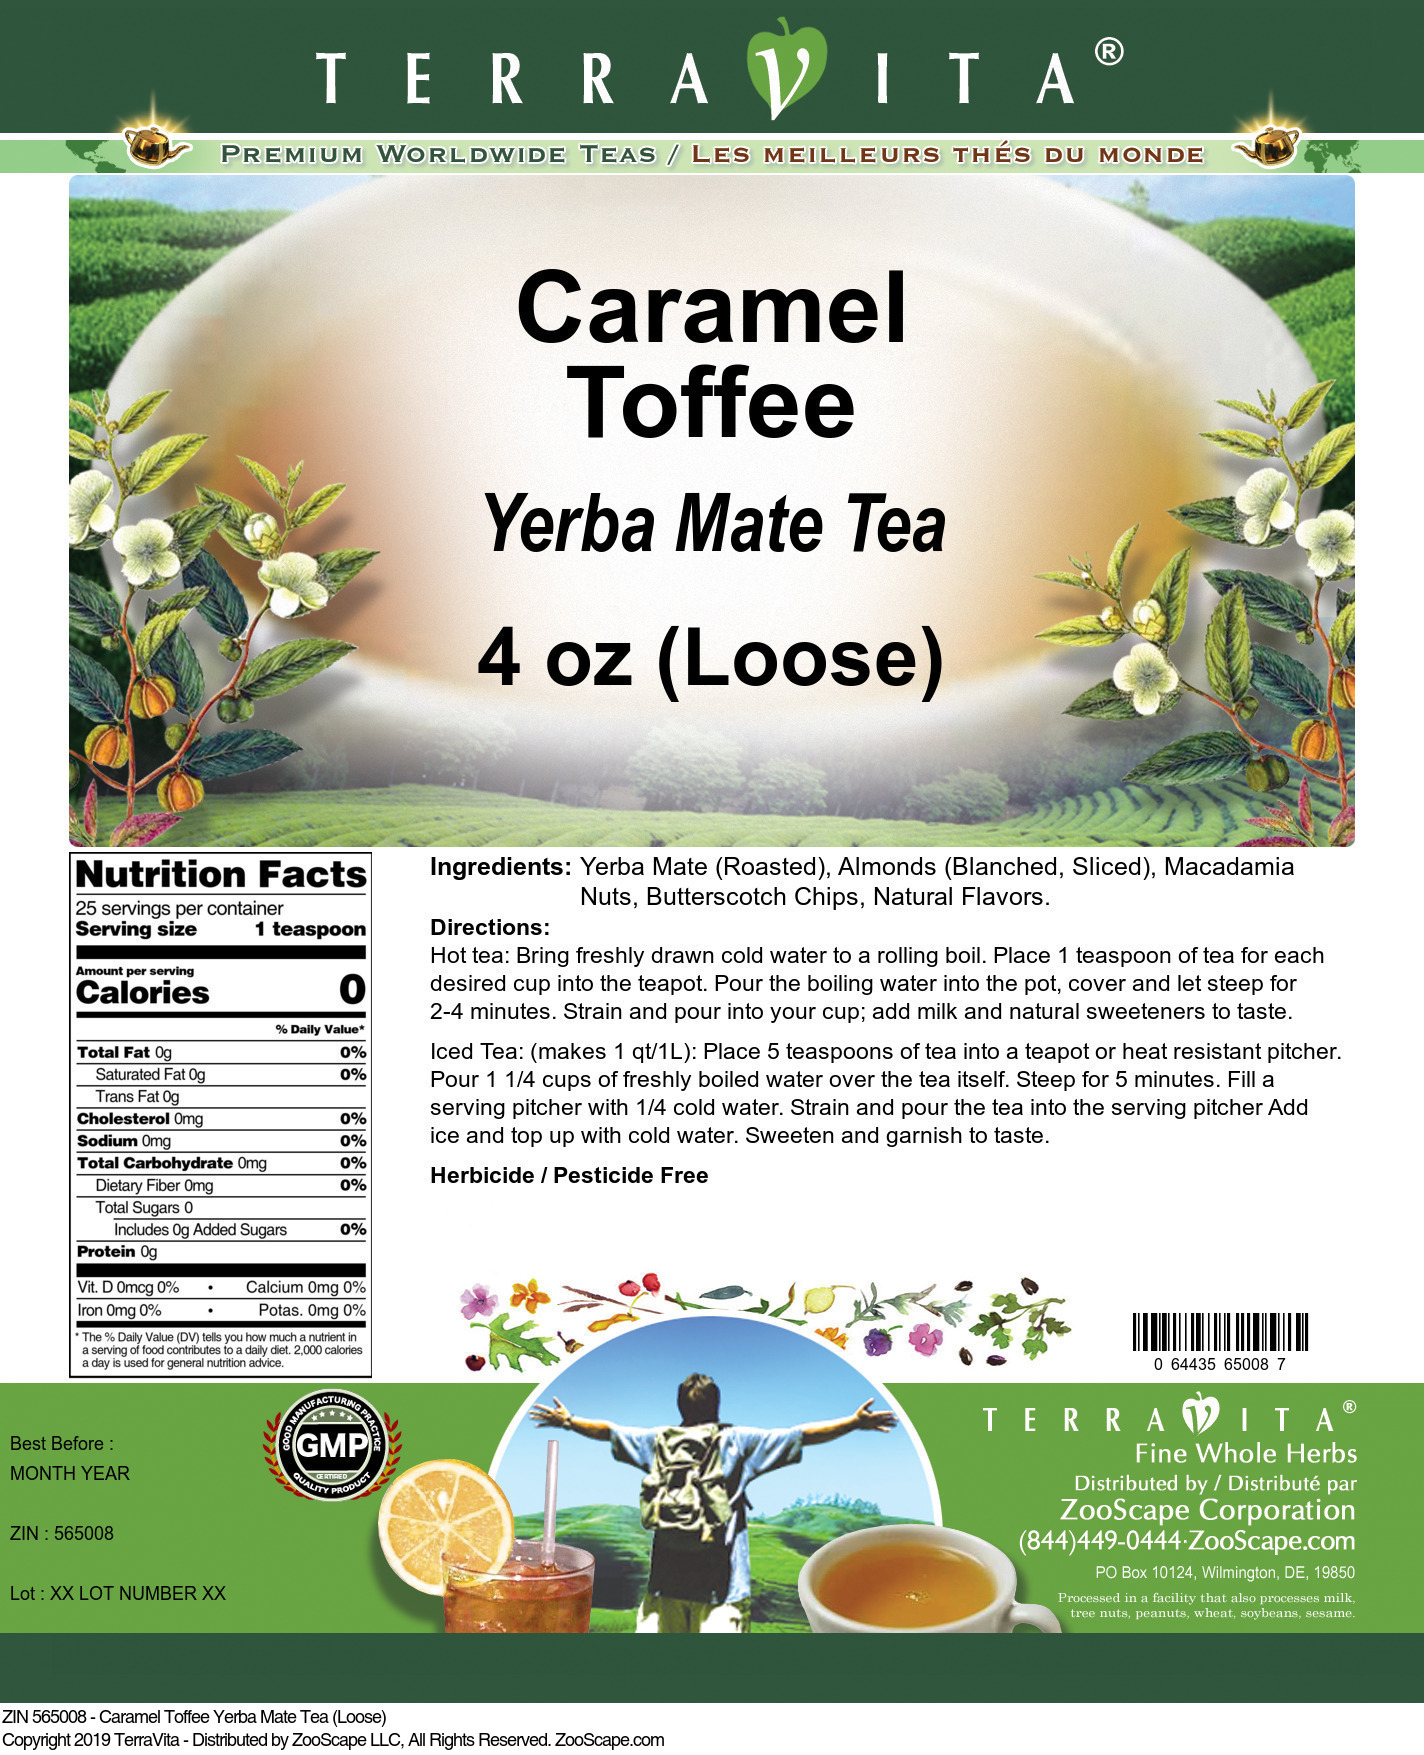 Caramel Toffee Yerba Mate Tea (Loose) - Label